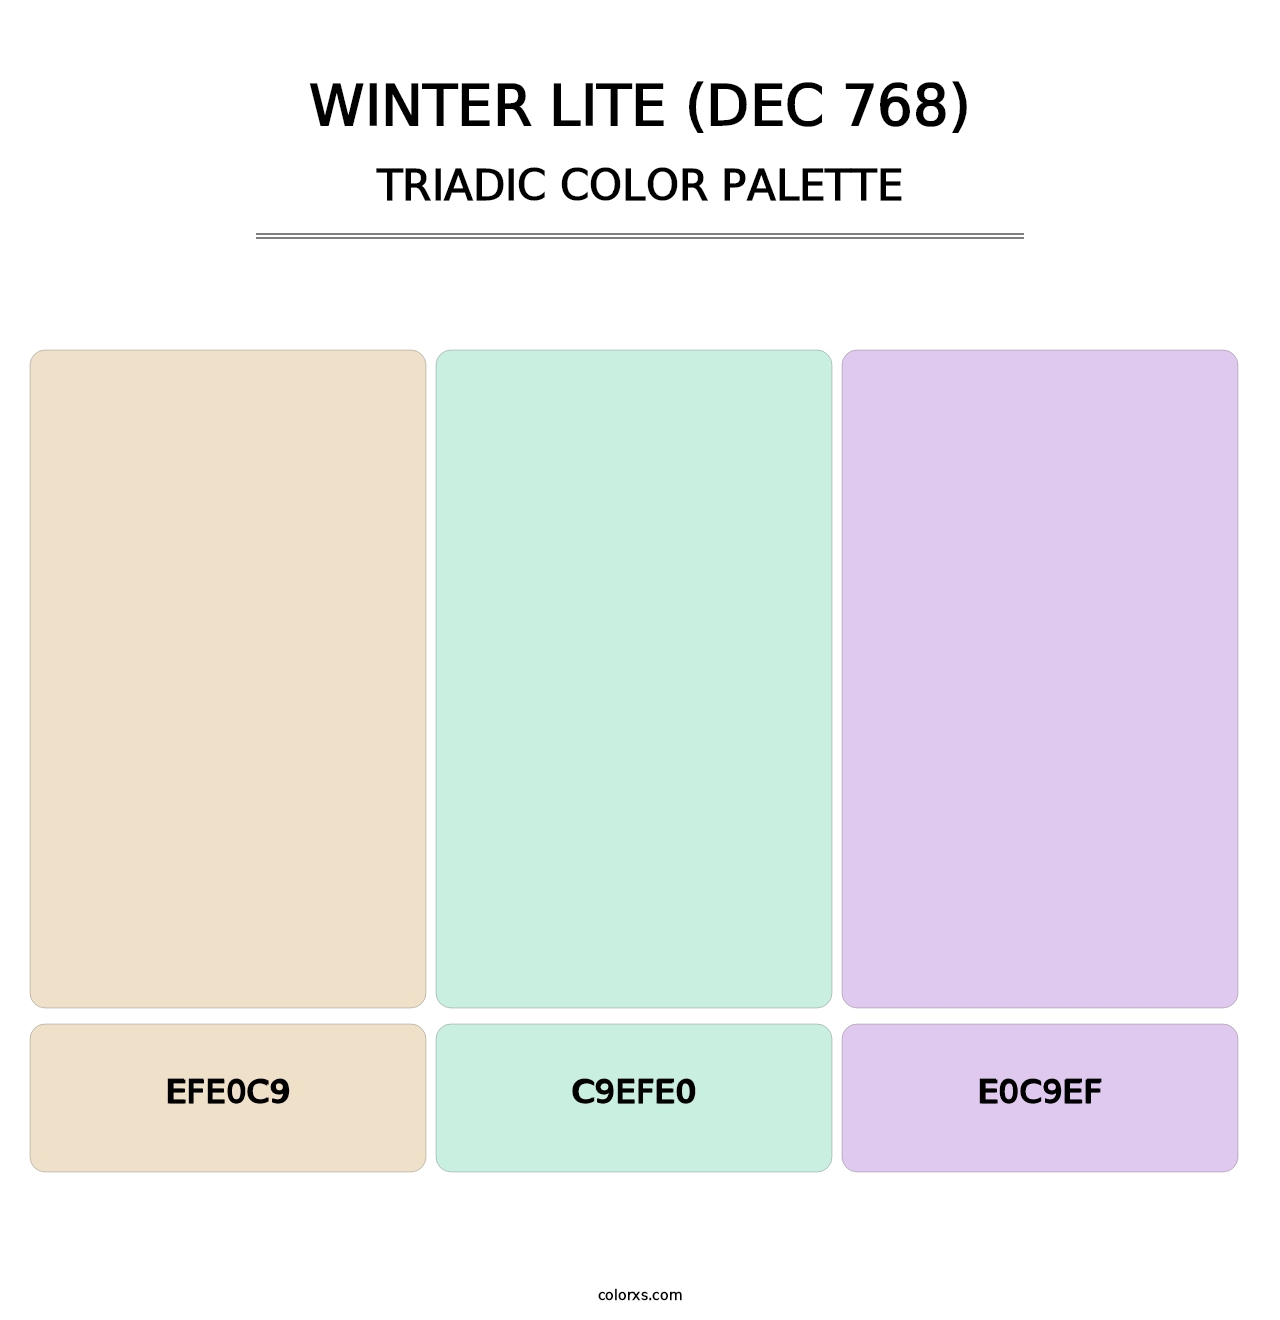 Winter Lite (DEC 768) - Triadic Color Palette